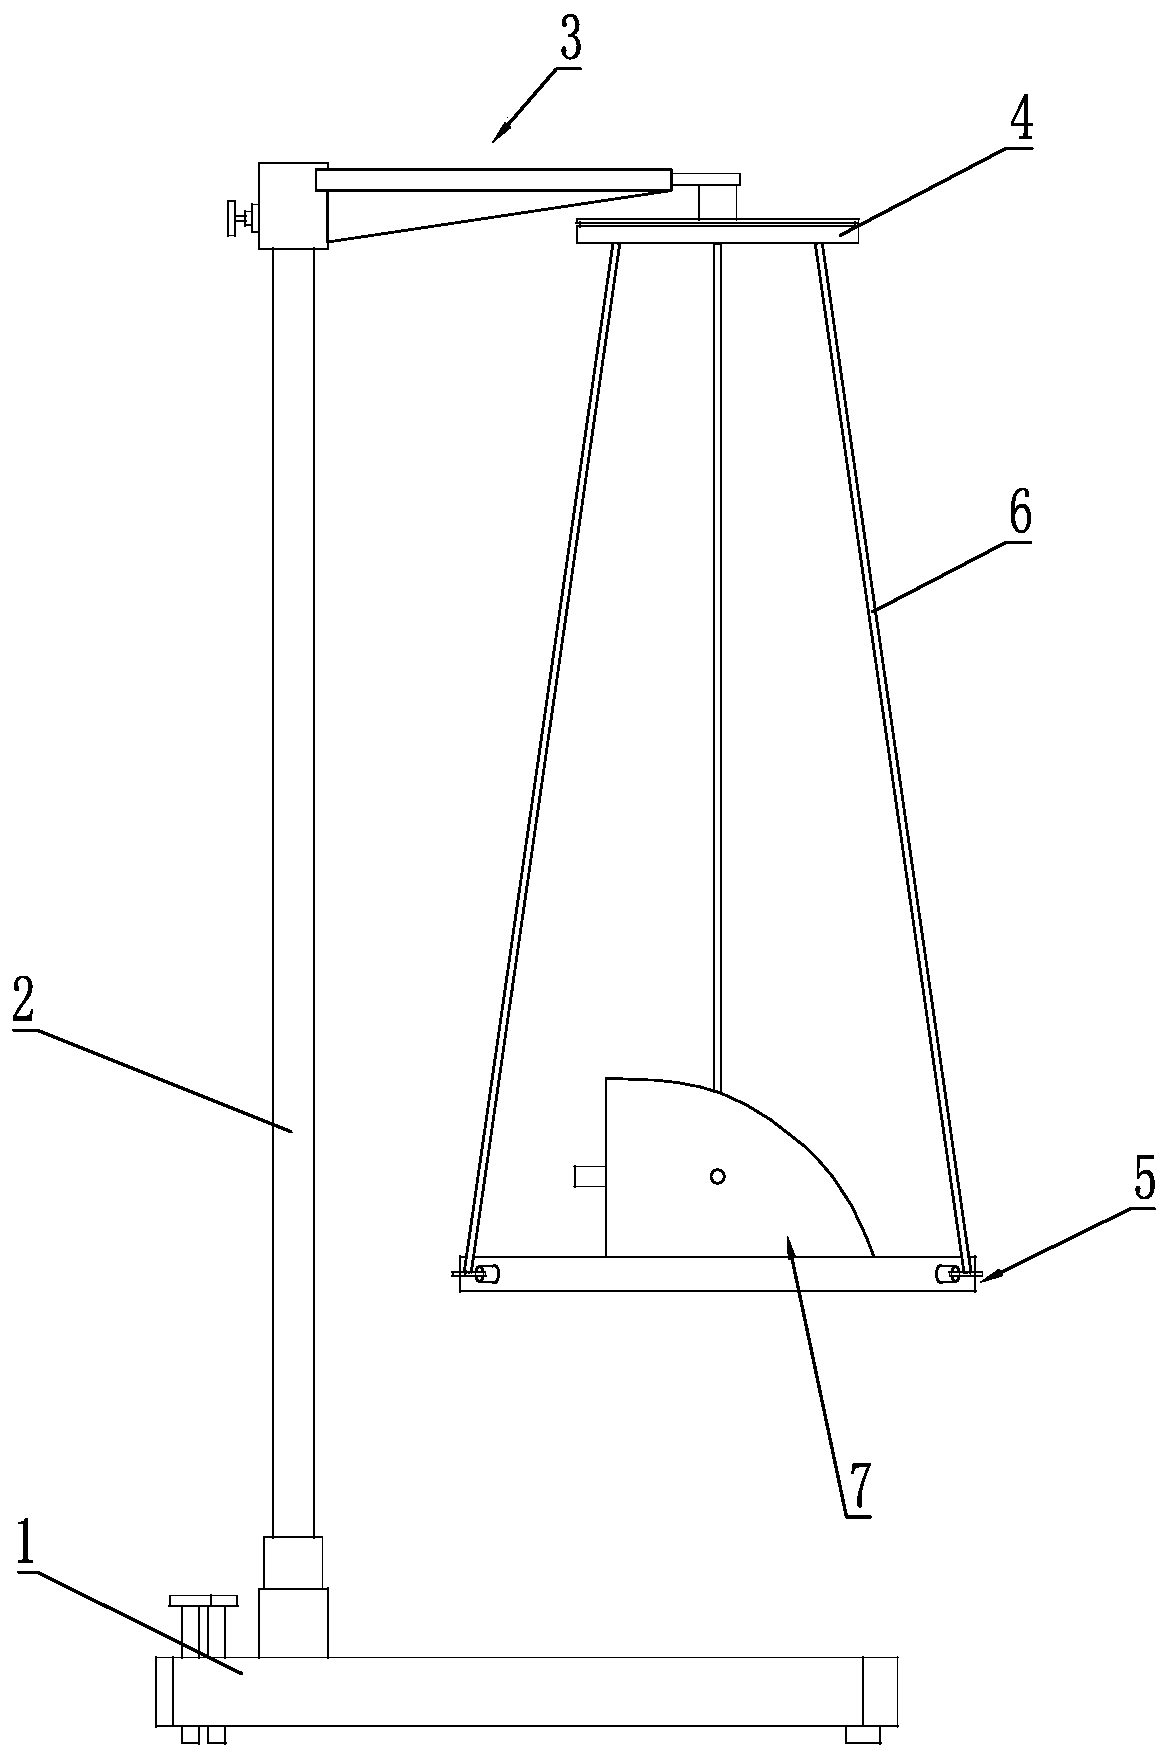 Rigid body accurate positioning three-line pendulum for verifying rigid body rotational inertia vertical axis theorem